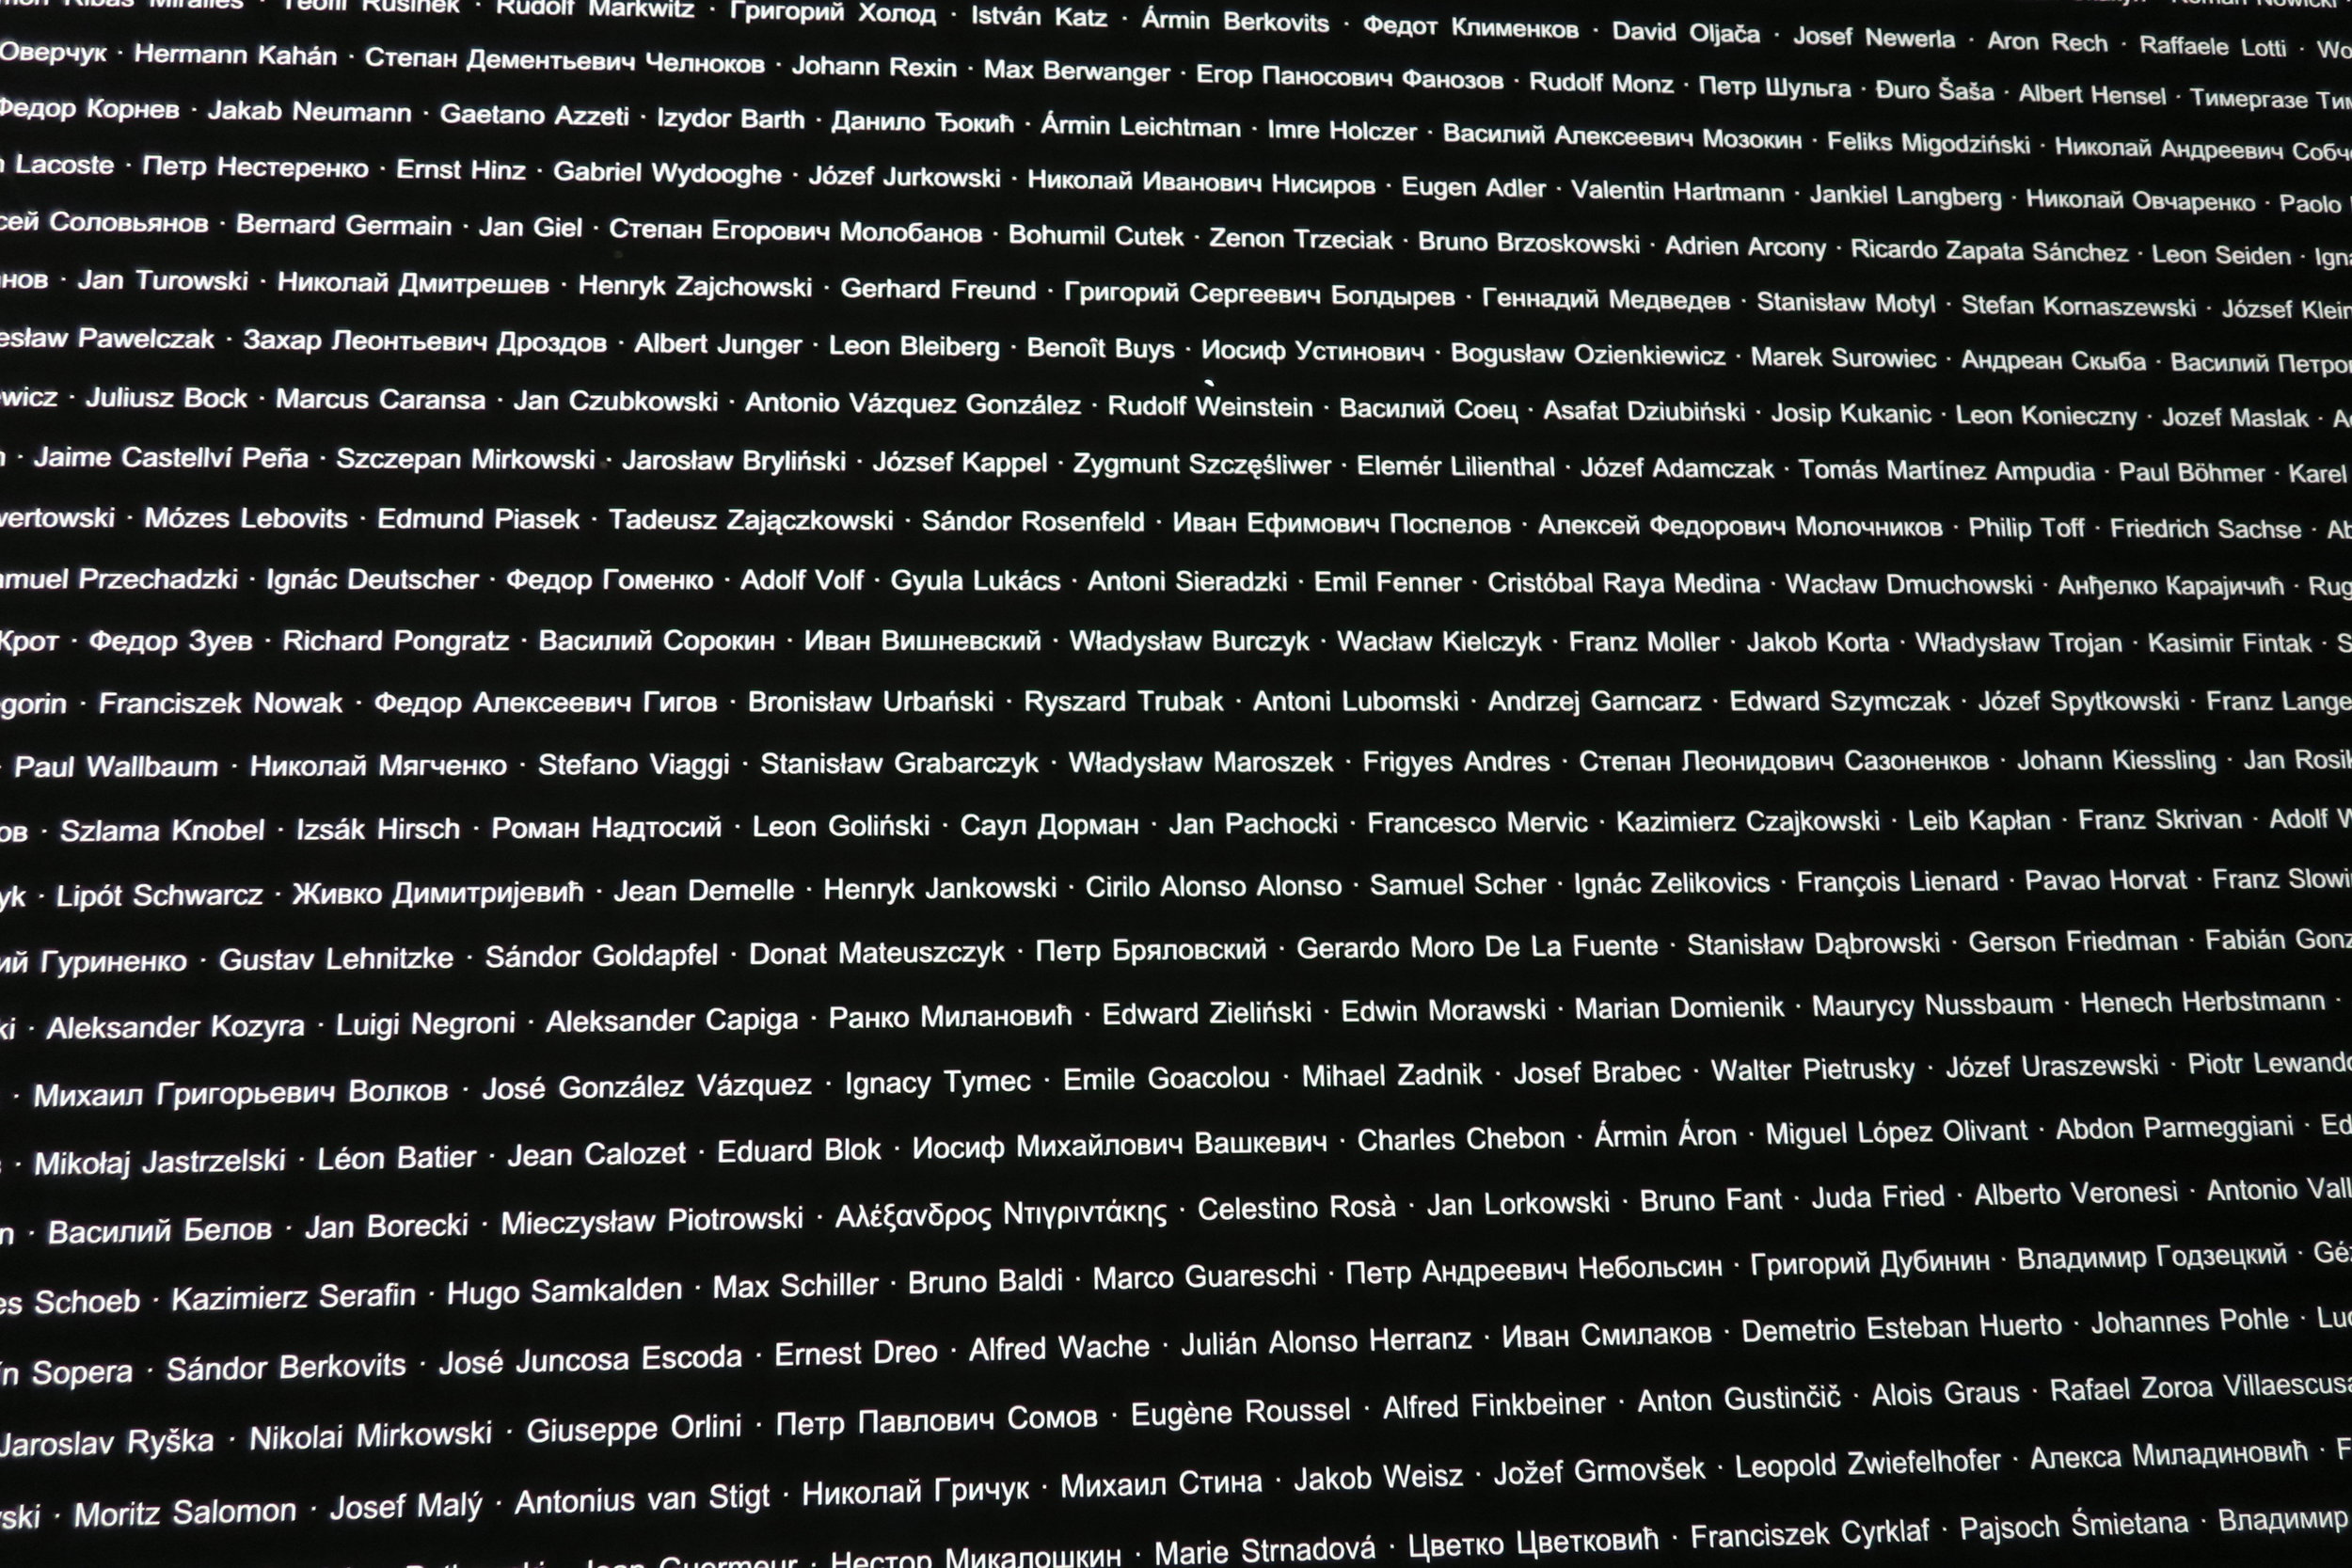 A wall listing prisoner names.